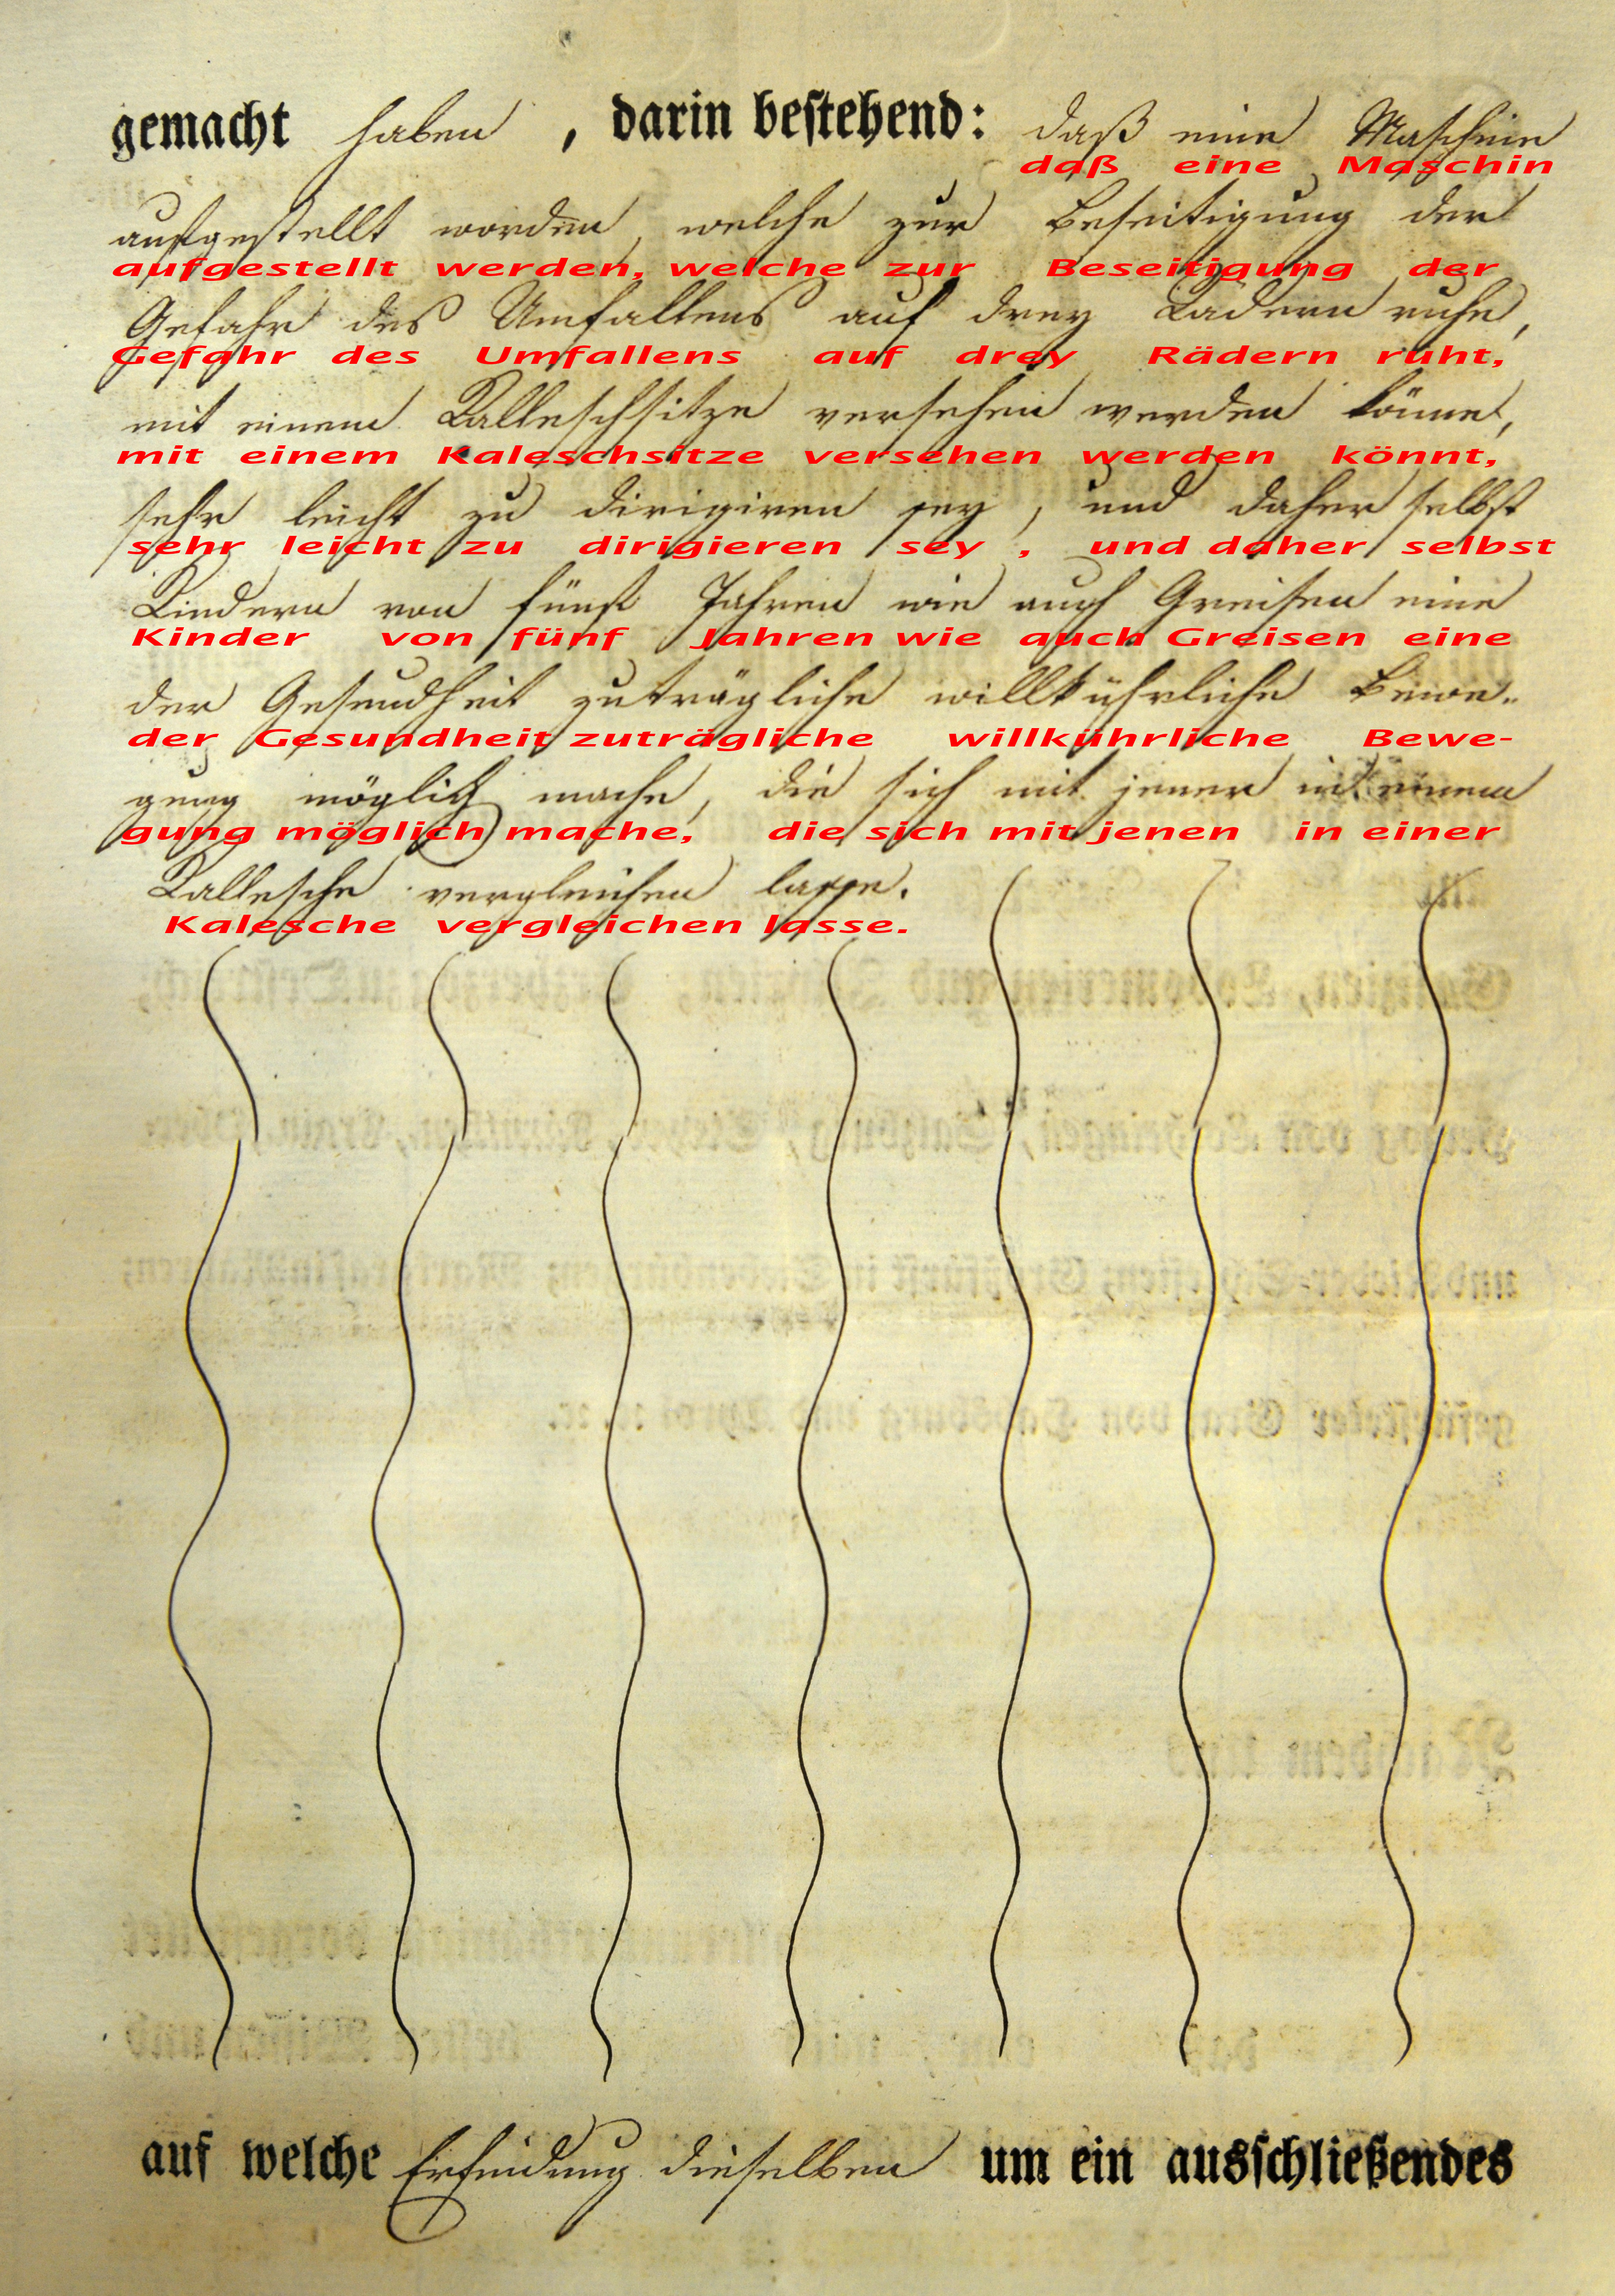 1824-anton-burg-patent-laufrad-2a.jpg